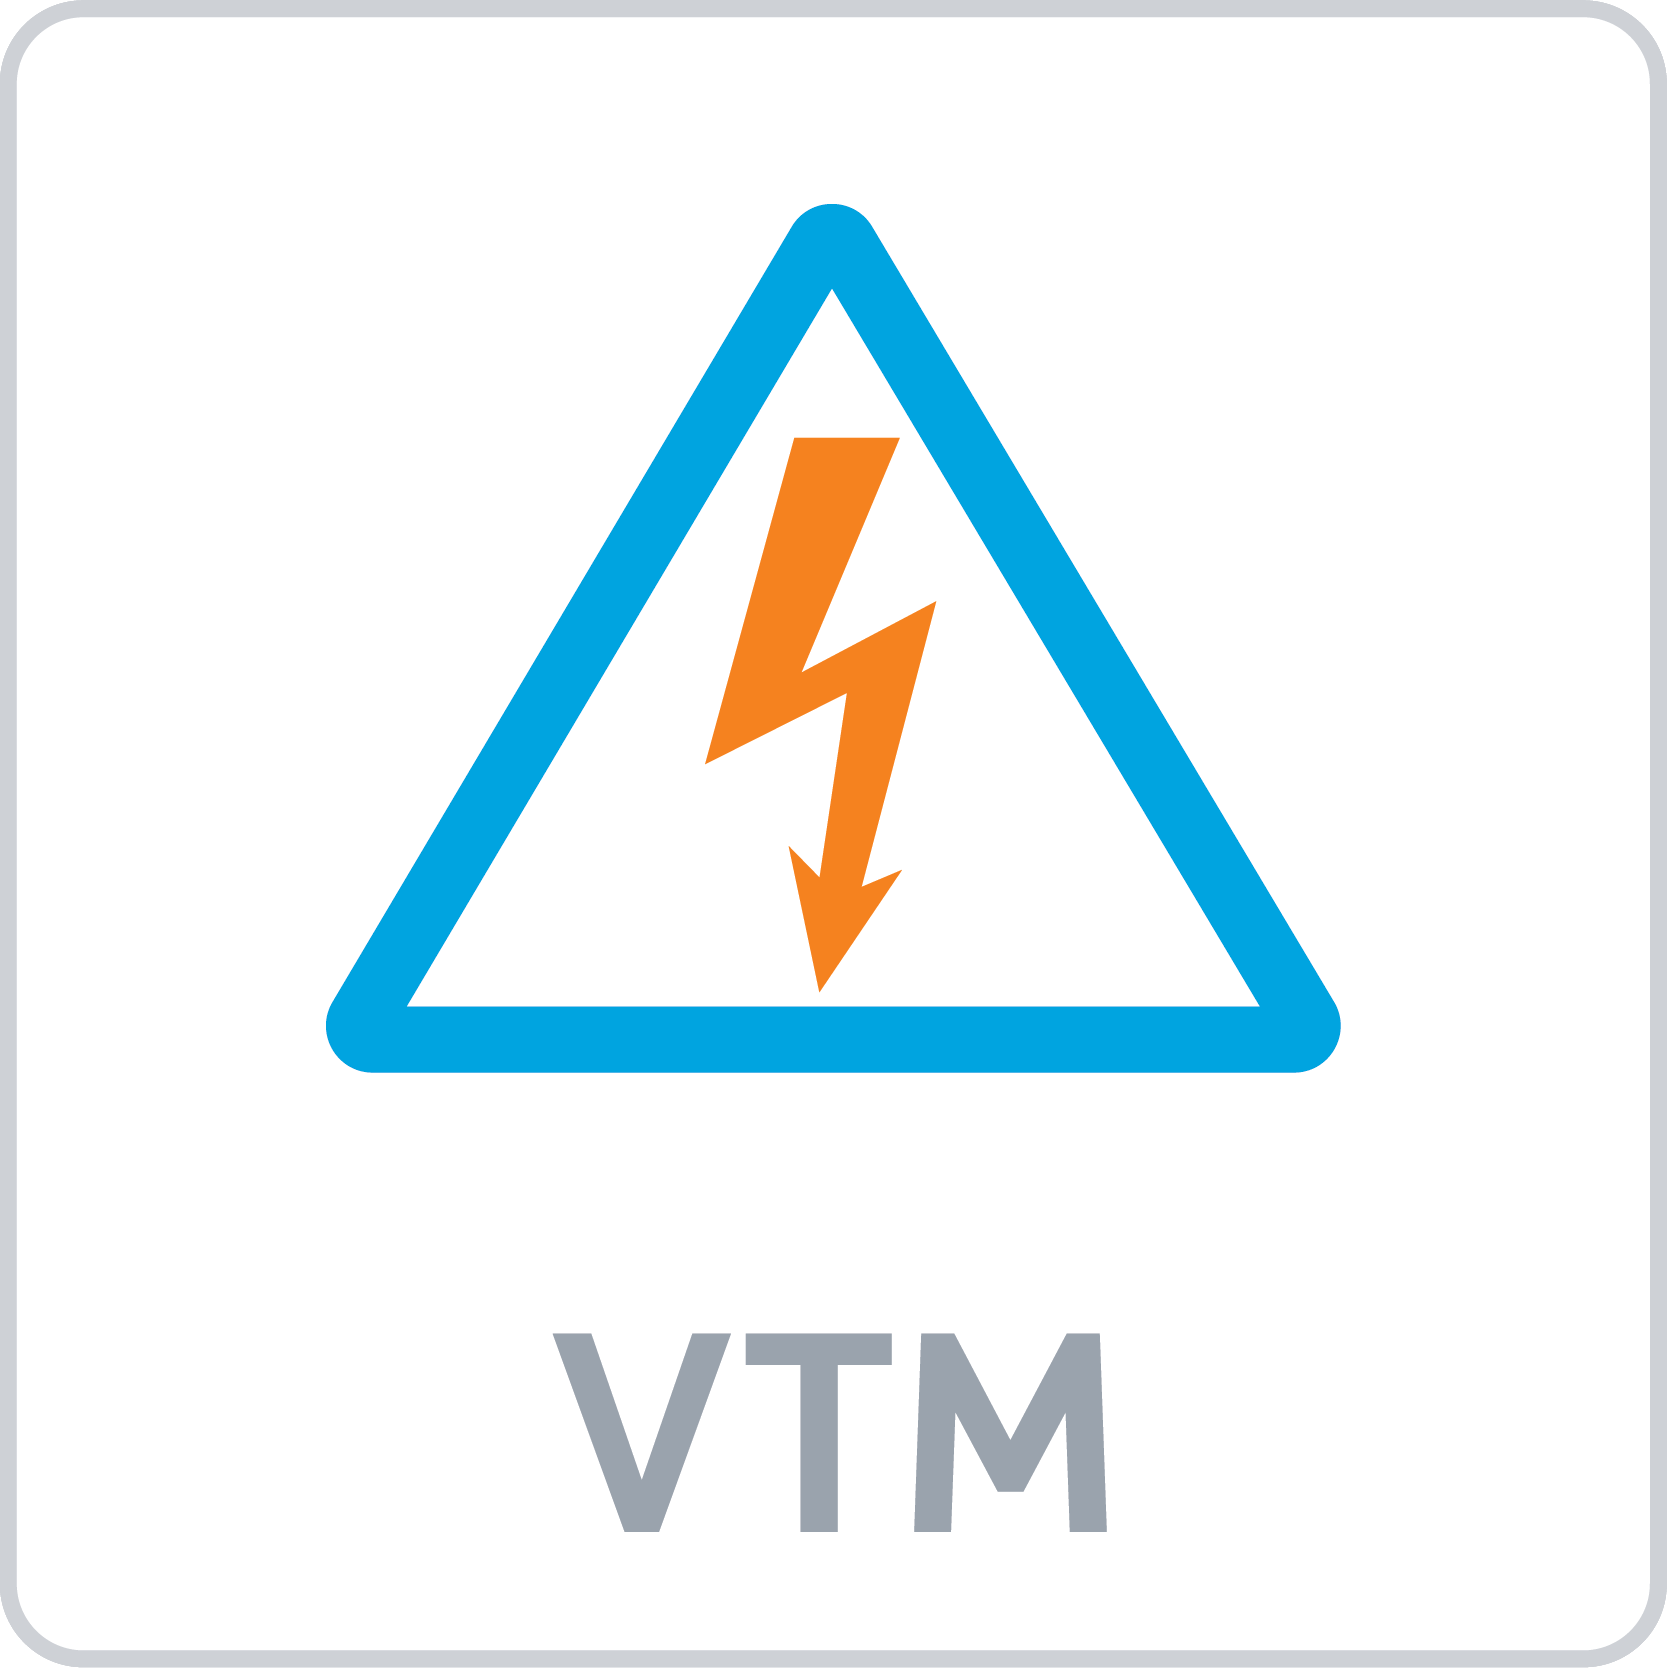 GM Voltage Transformation Module (VTM)